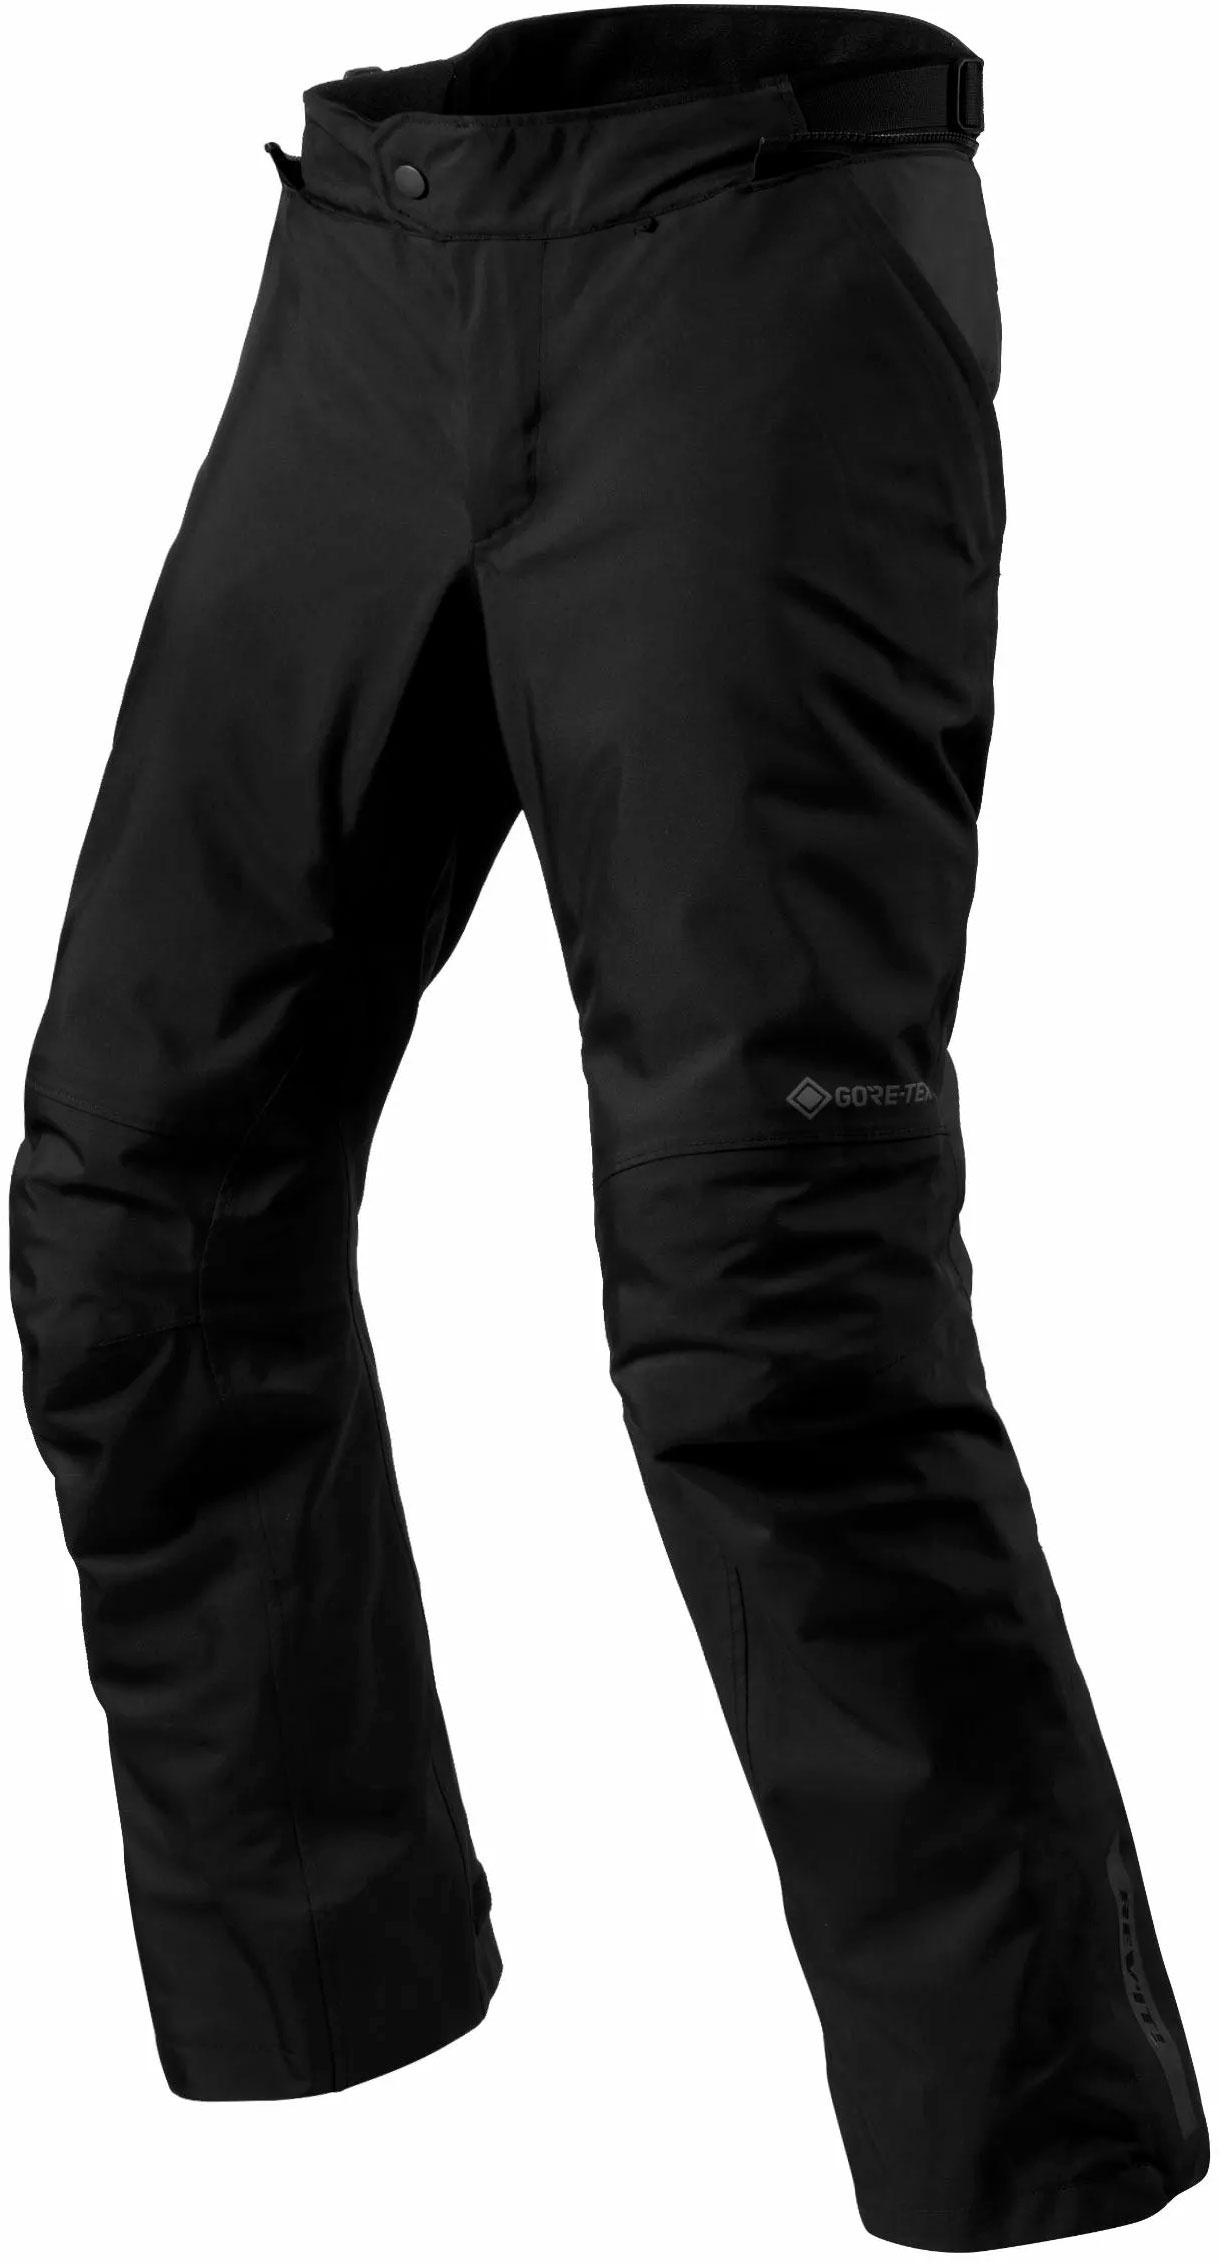 Revit Vertical GTX, pantalon textile imperméable - Noir - 3XL